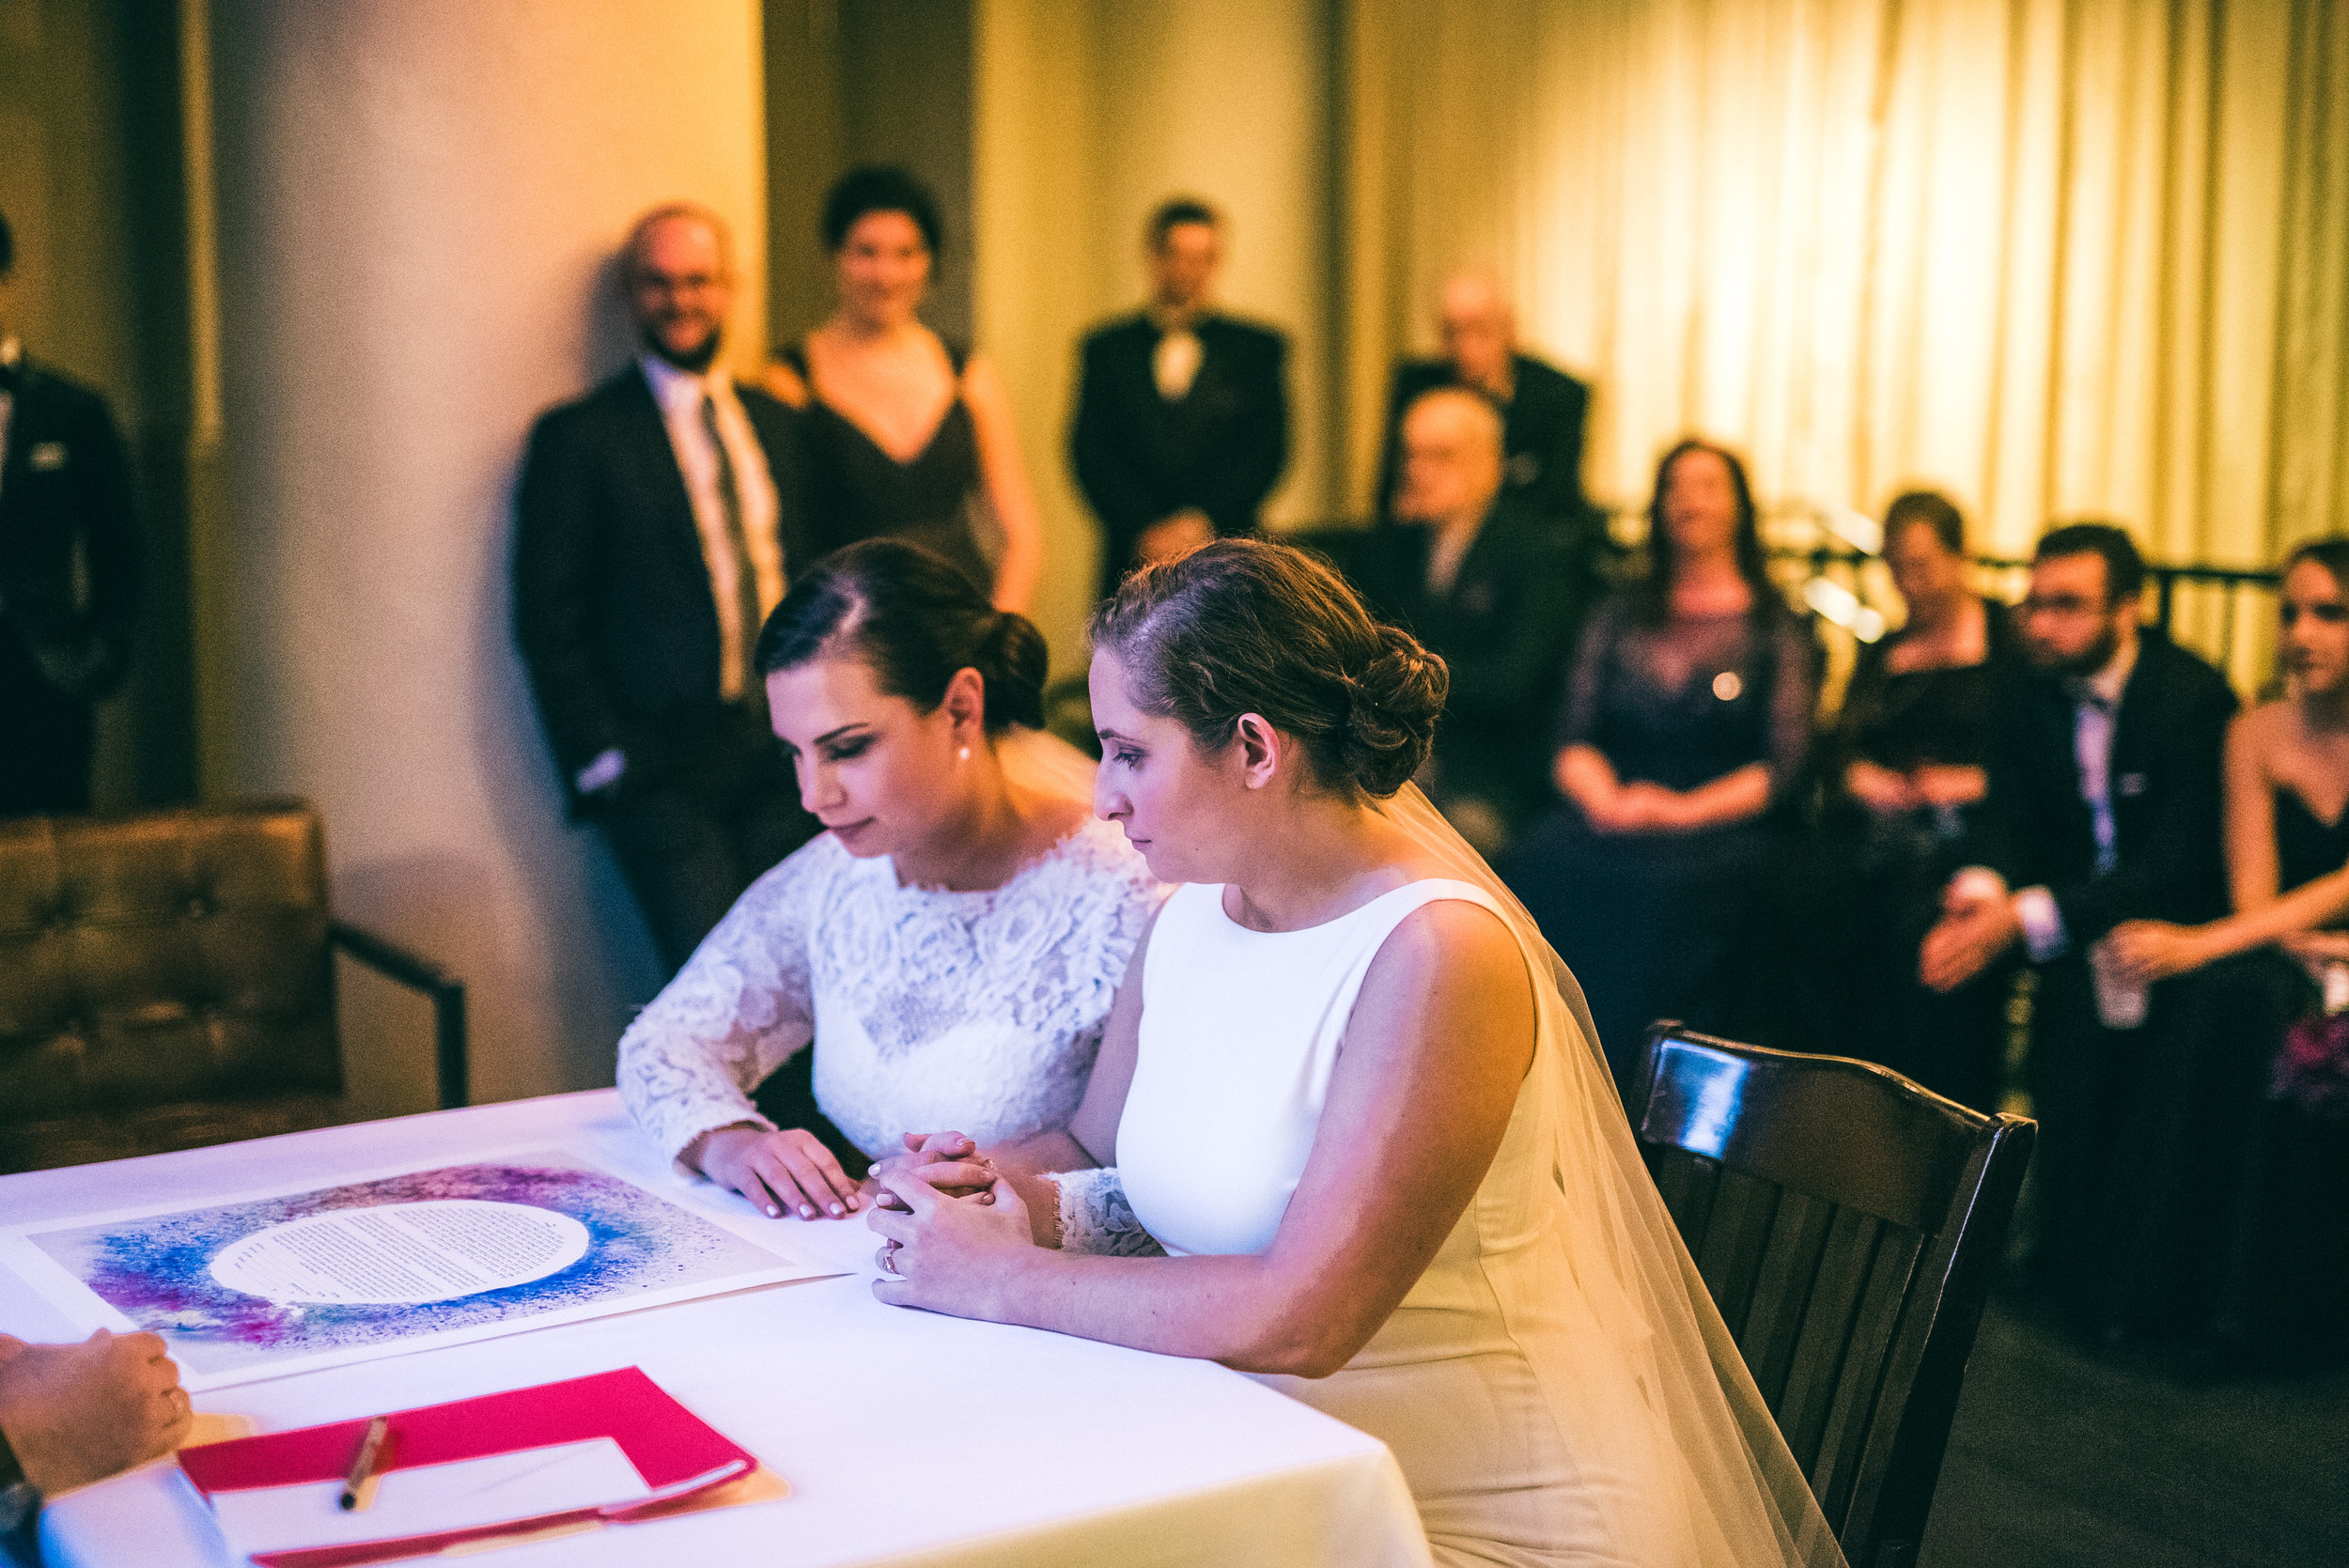 Jewish wedding ceremony for two brides